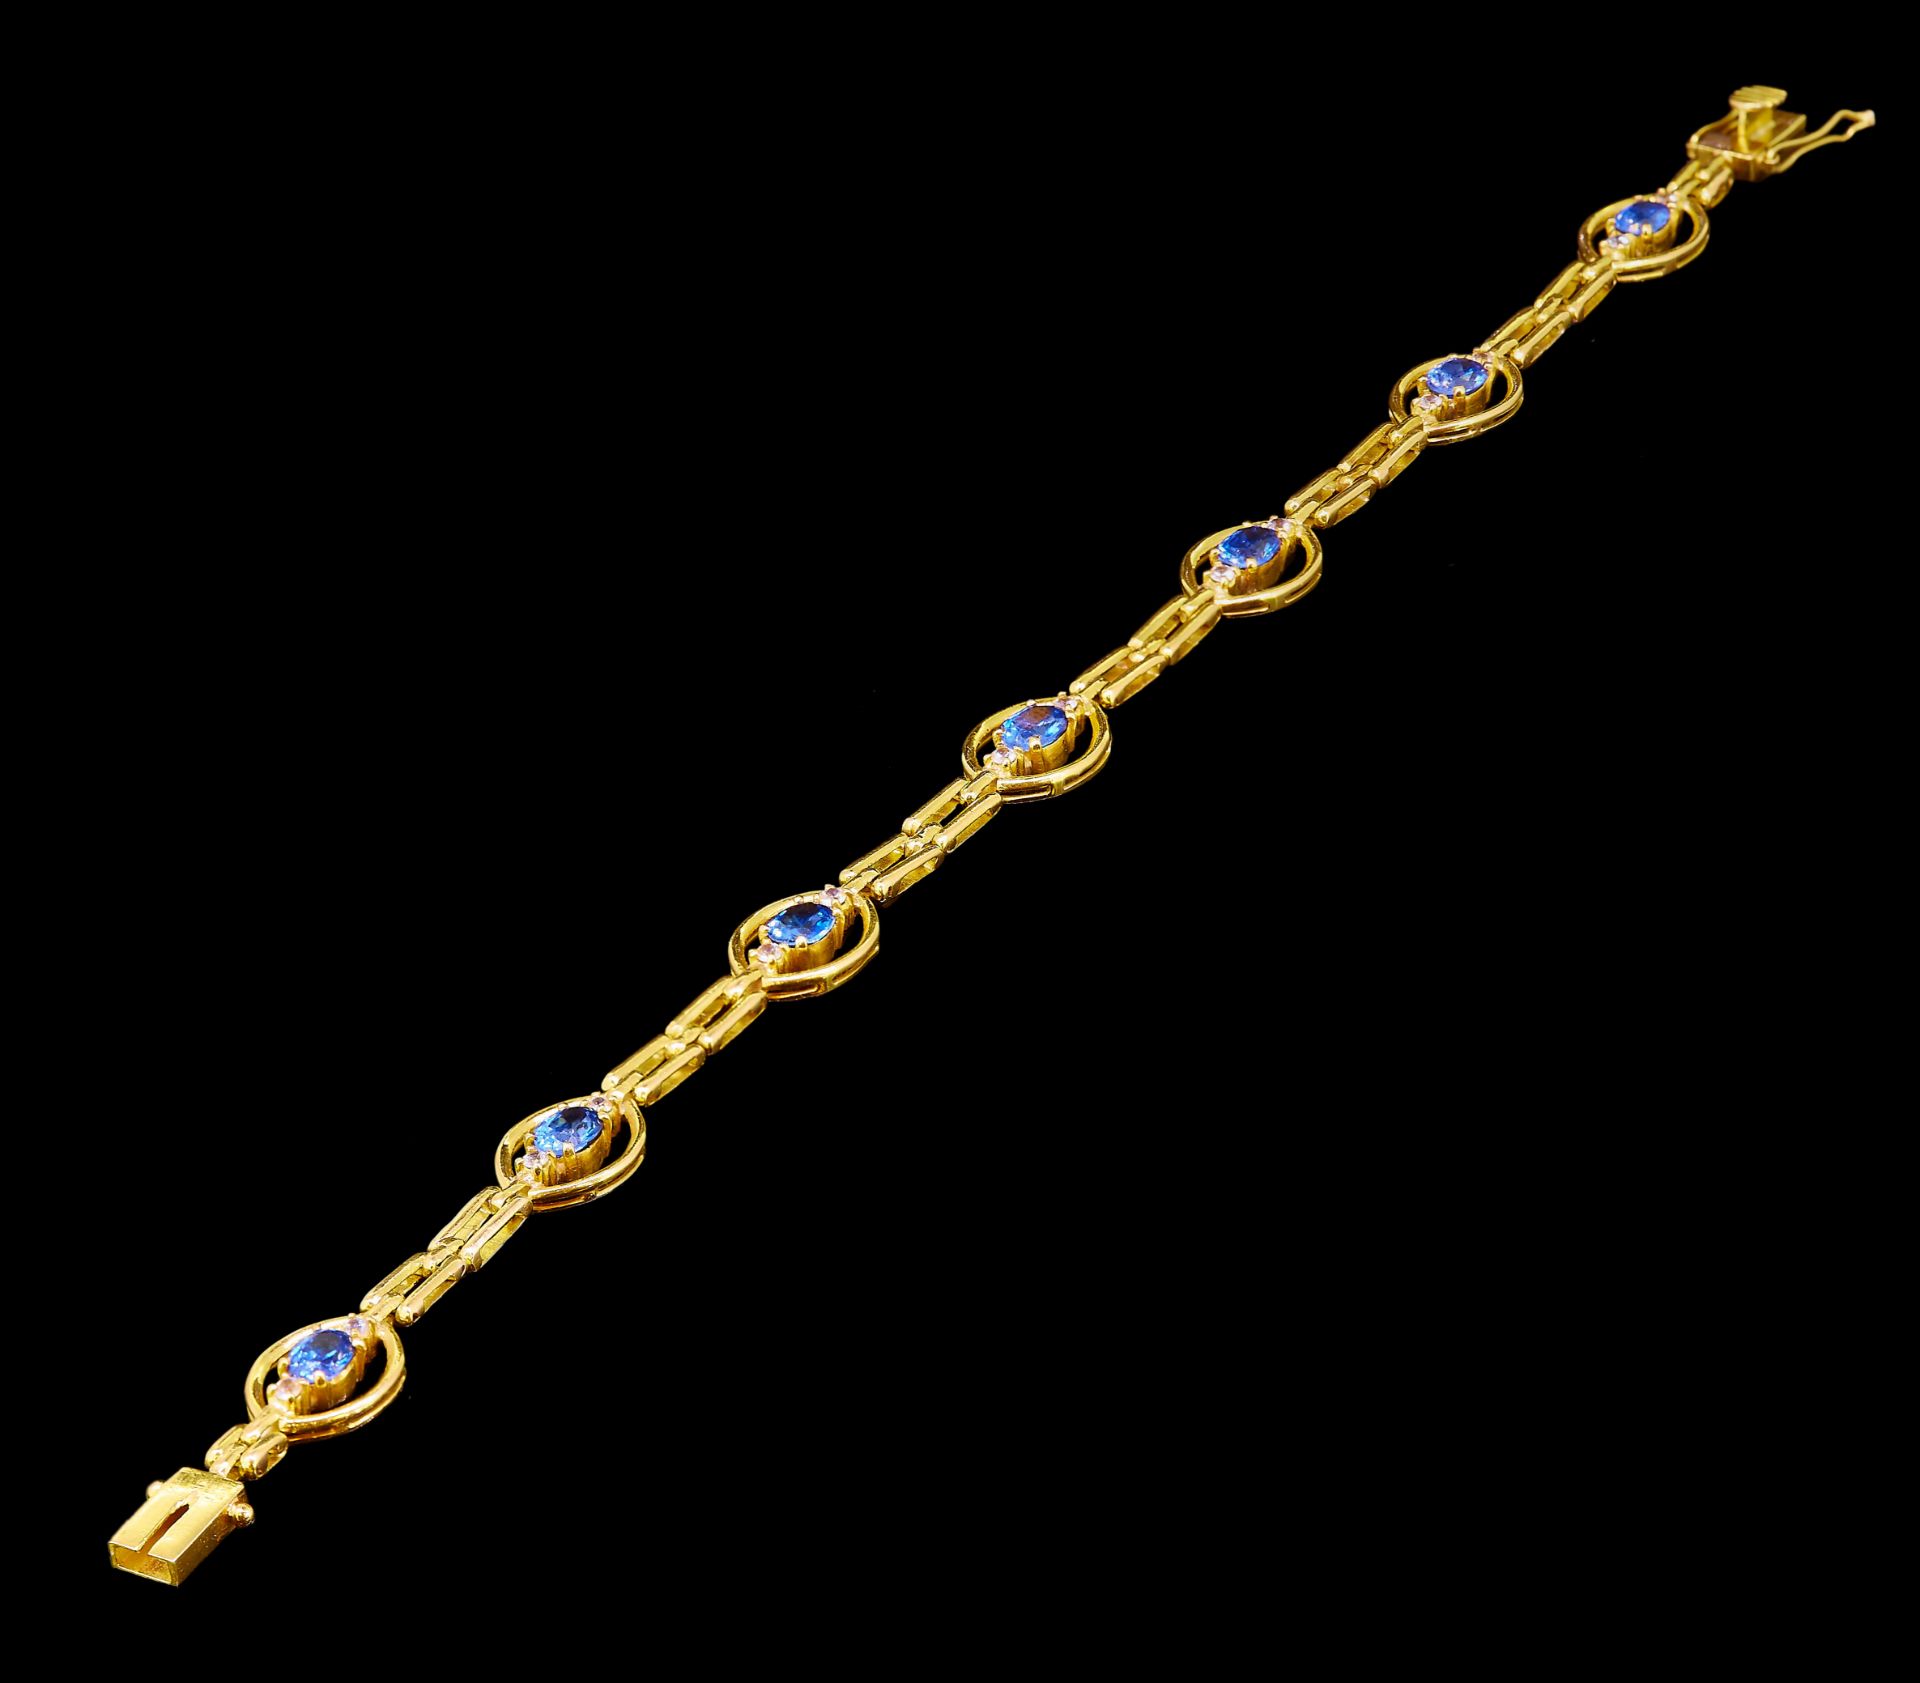 SAPPHIRE AND DIAMOND LINK BRACELET - Image 2 of 2